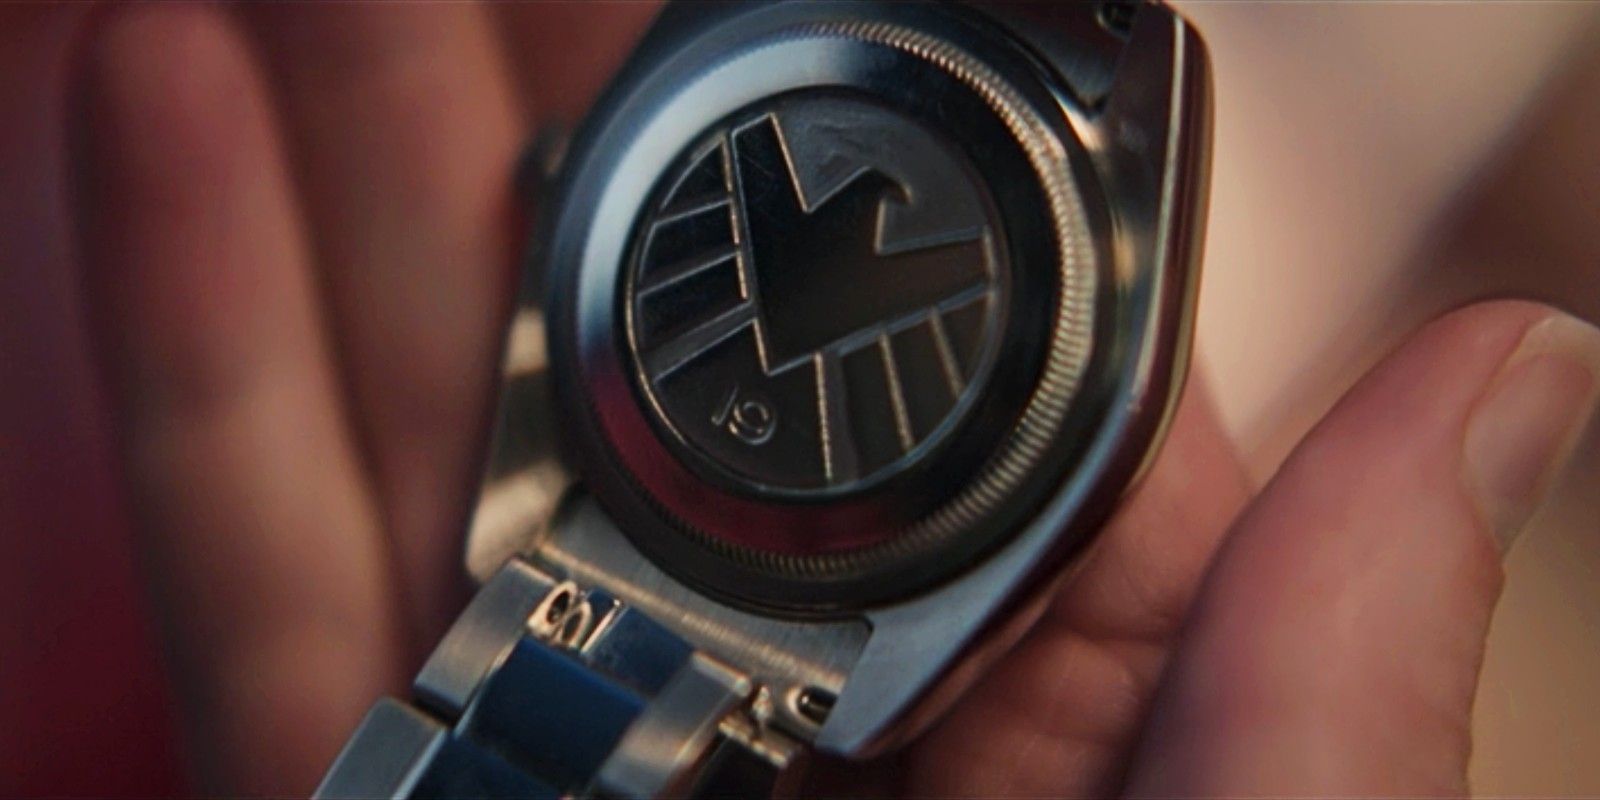 Laura Barton's watch in Hawkeye